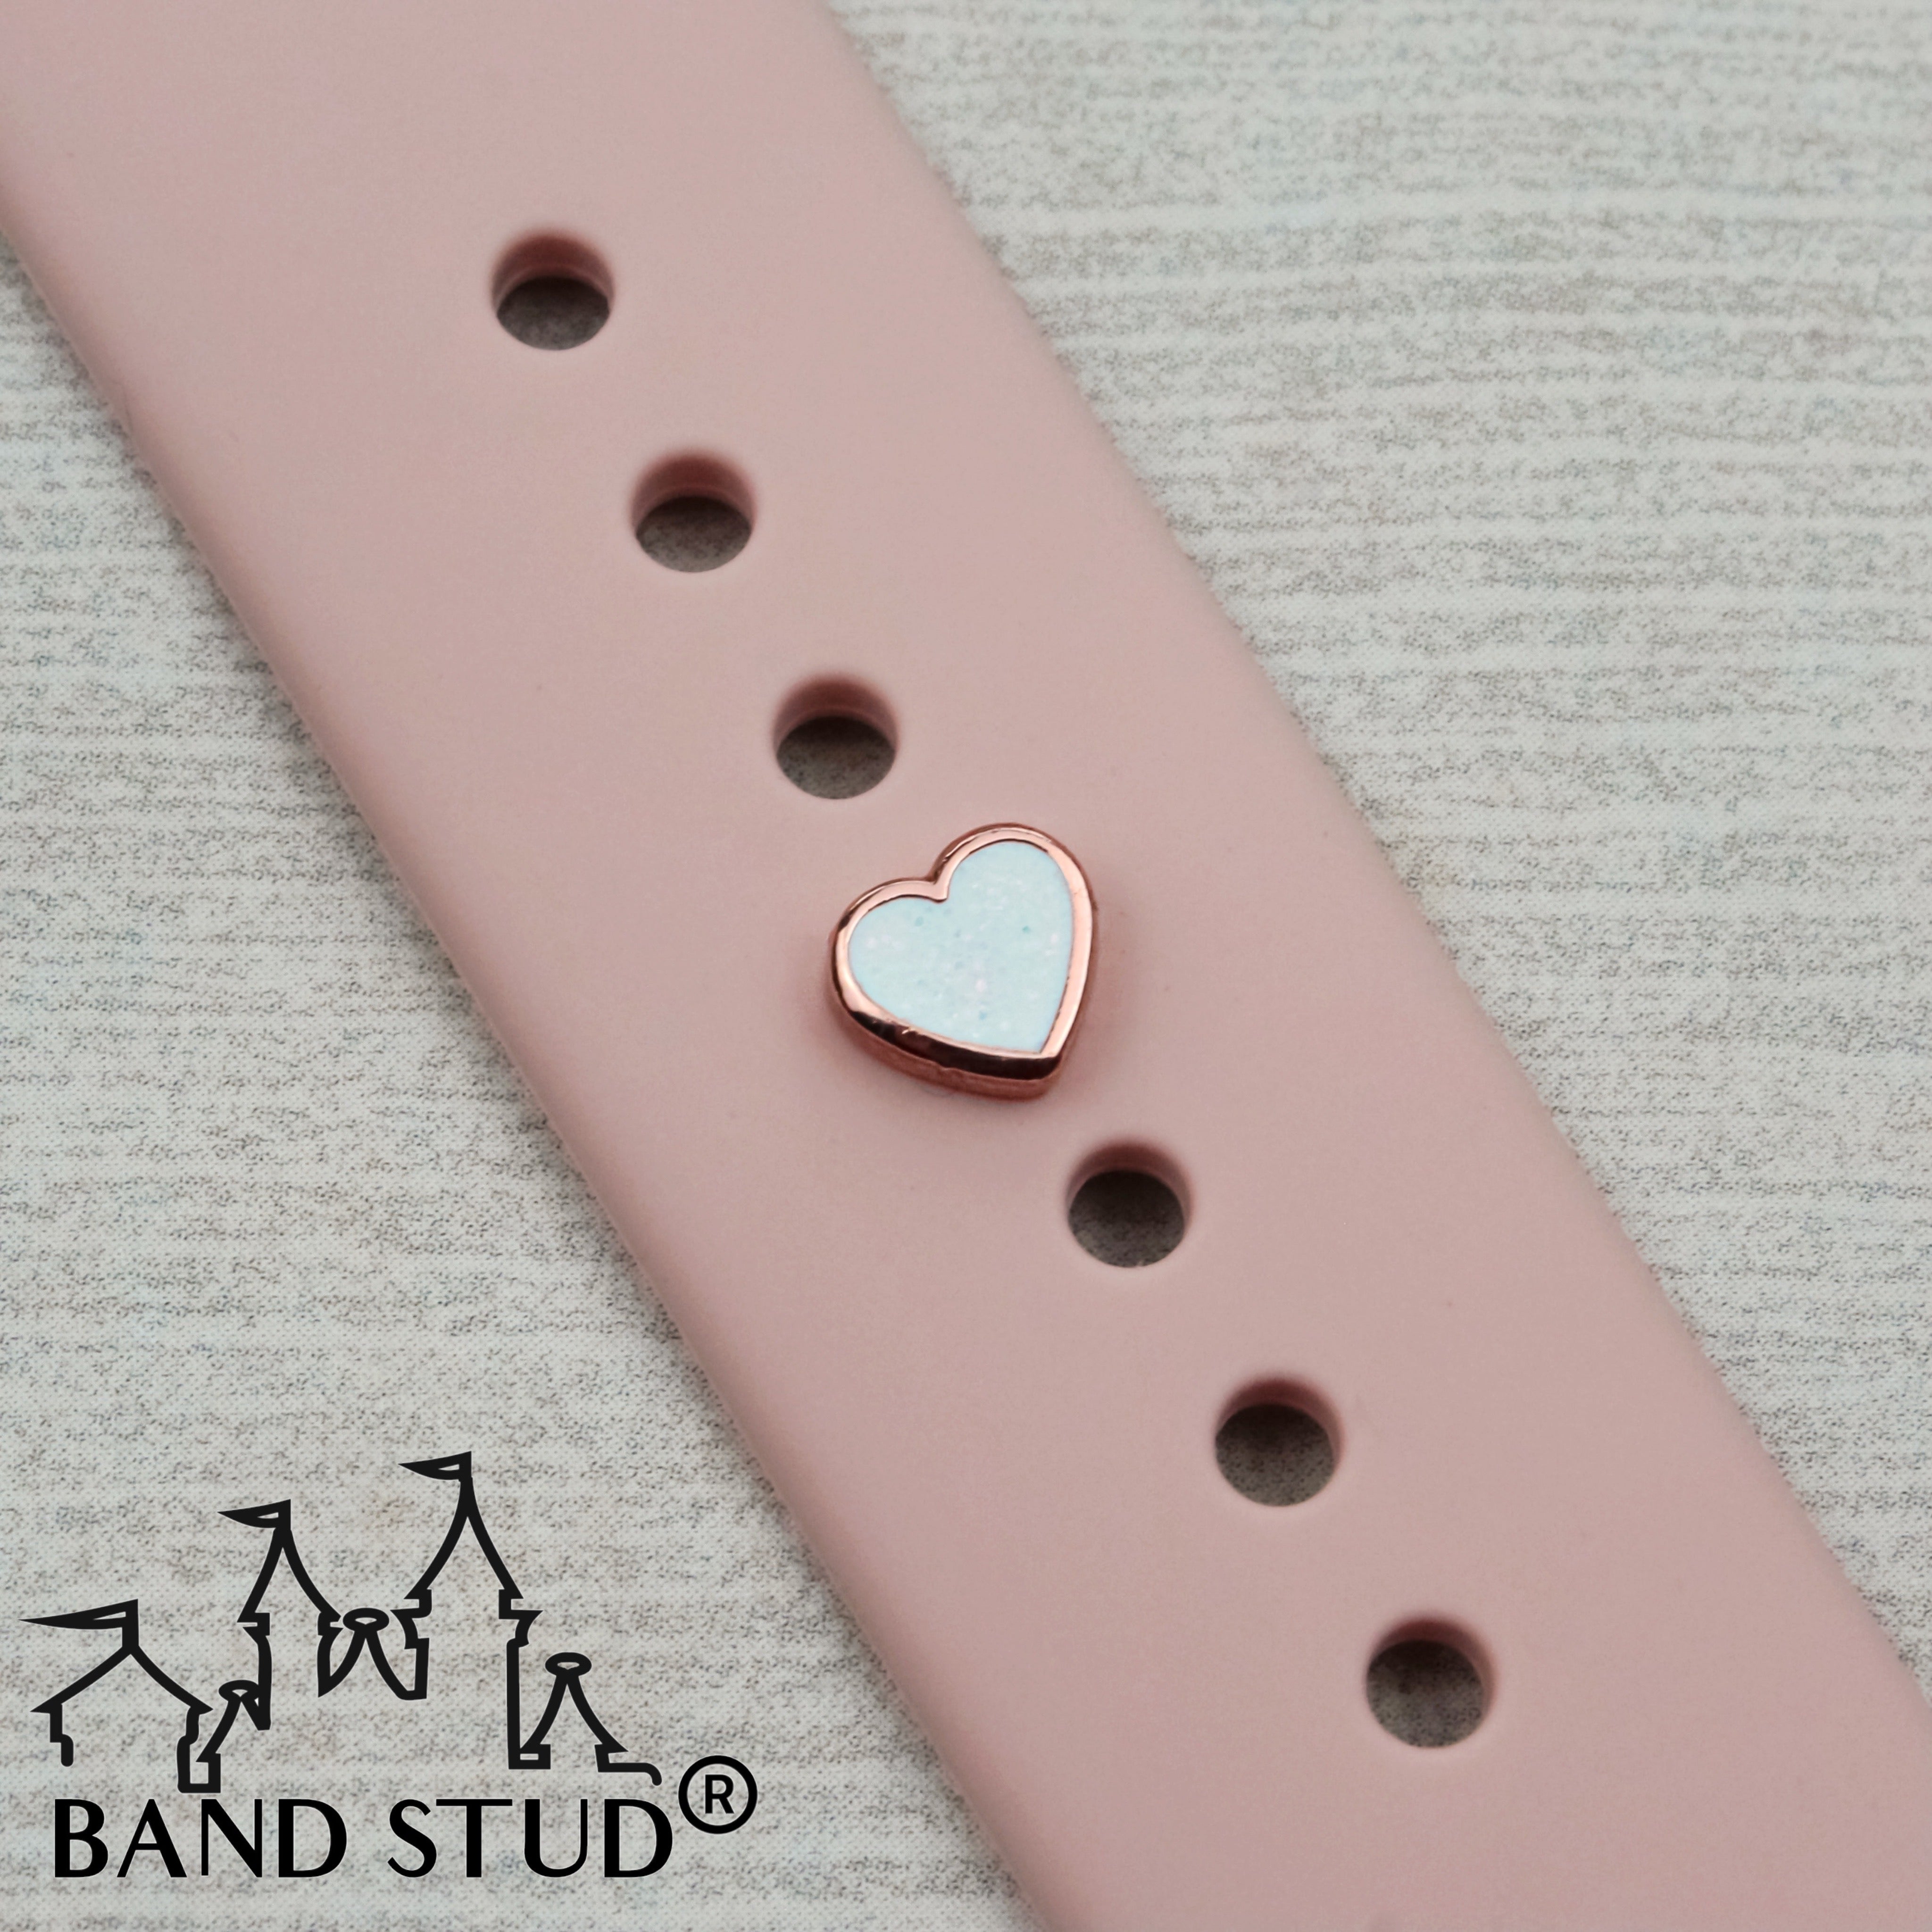 Band Stud® Mini - Heart